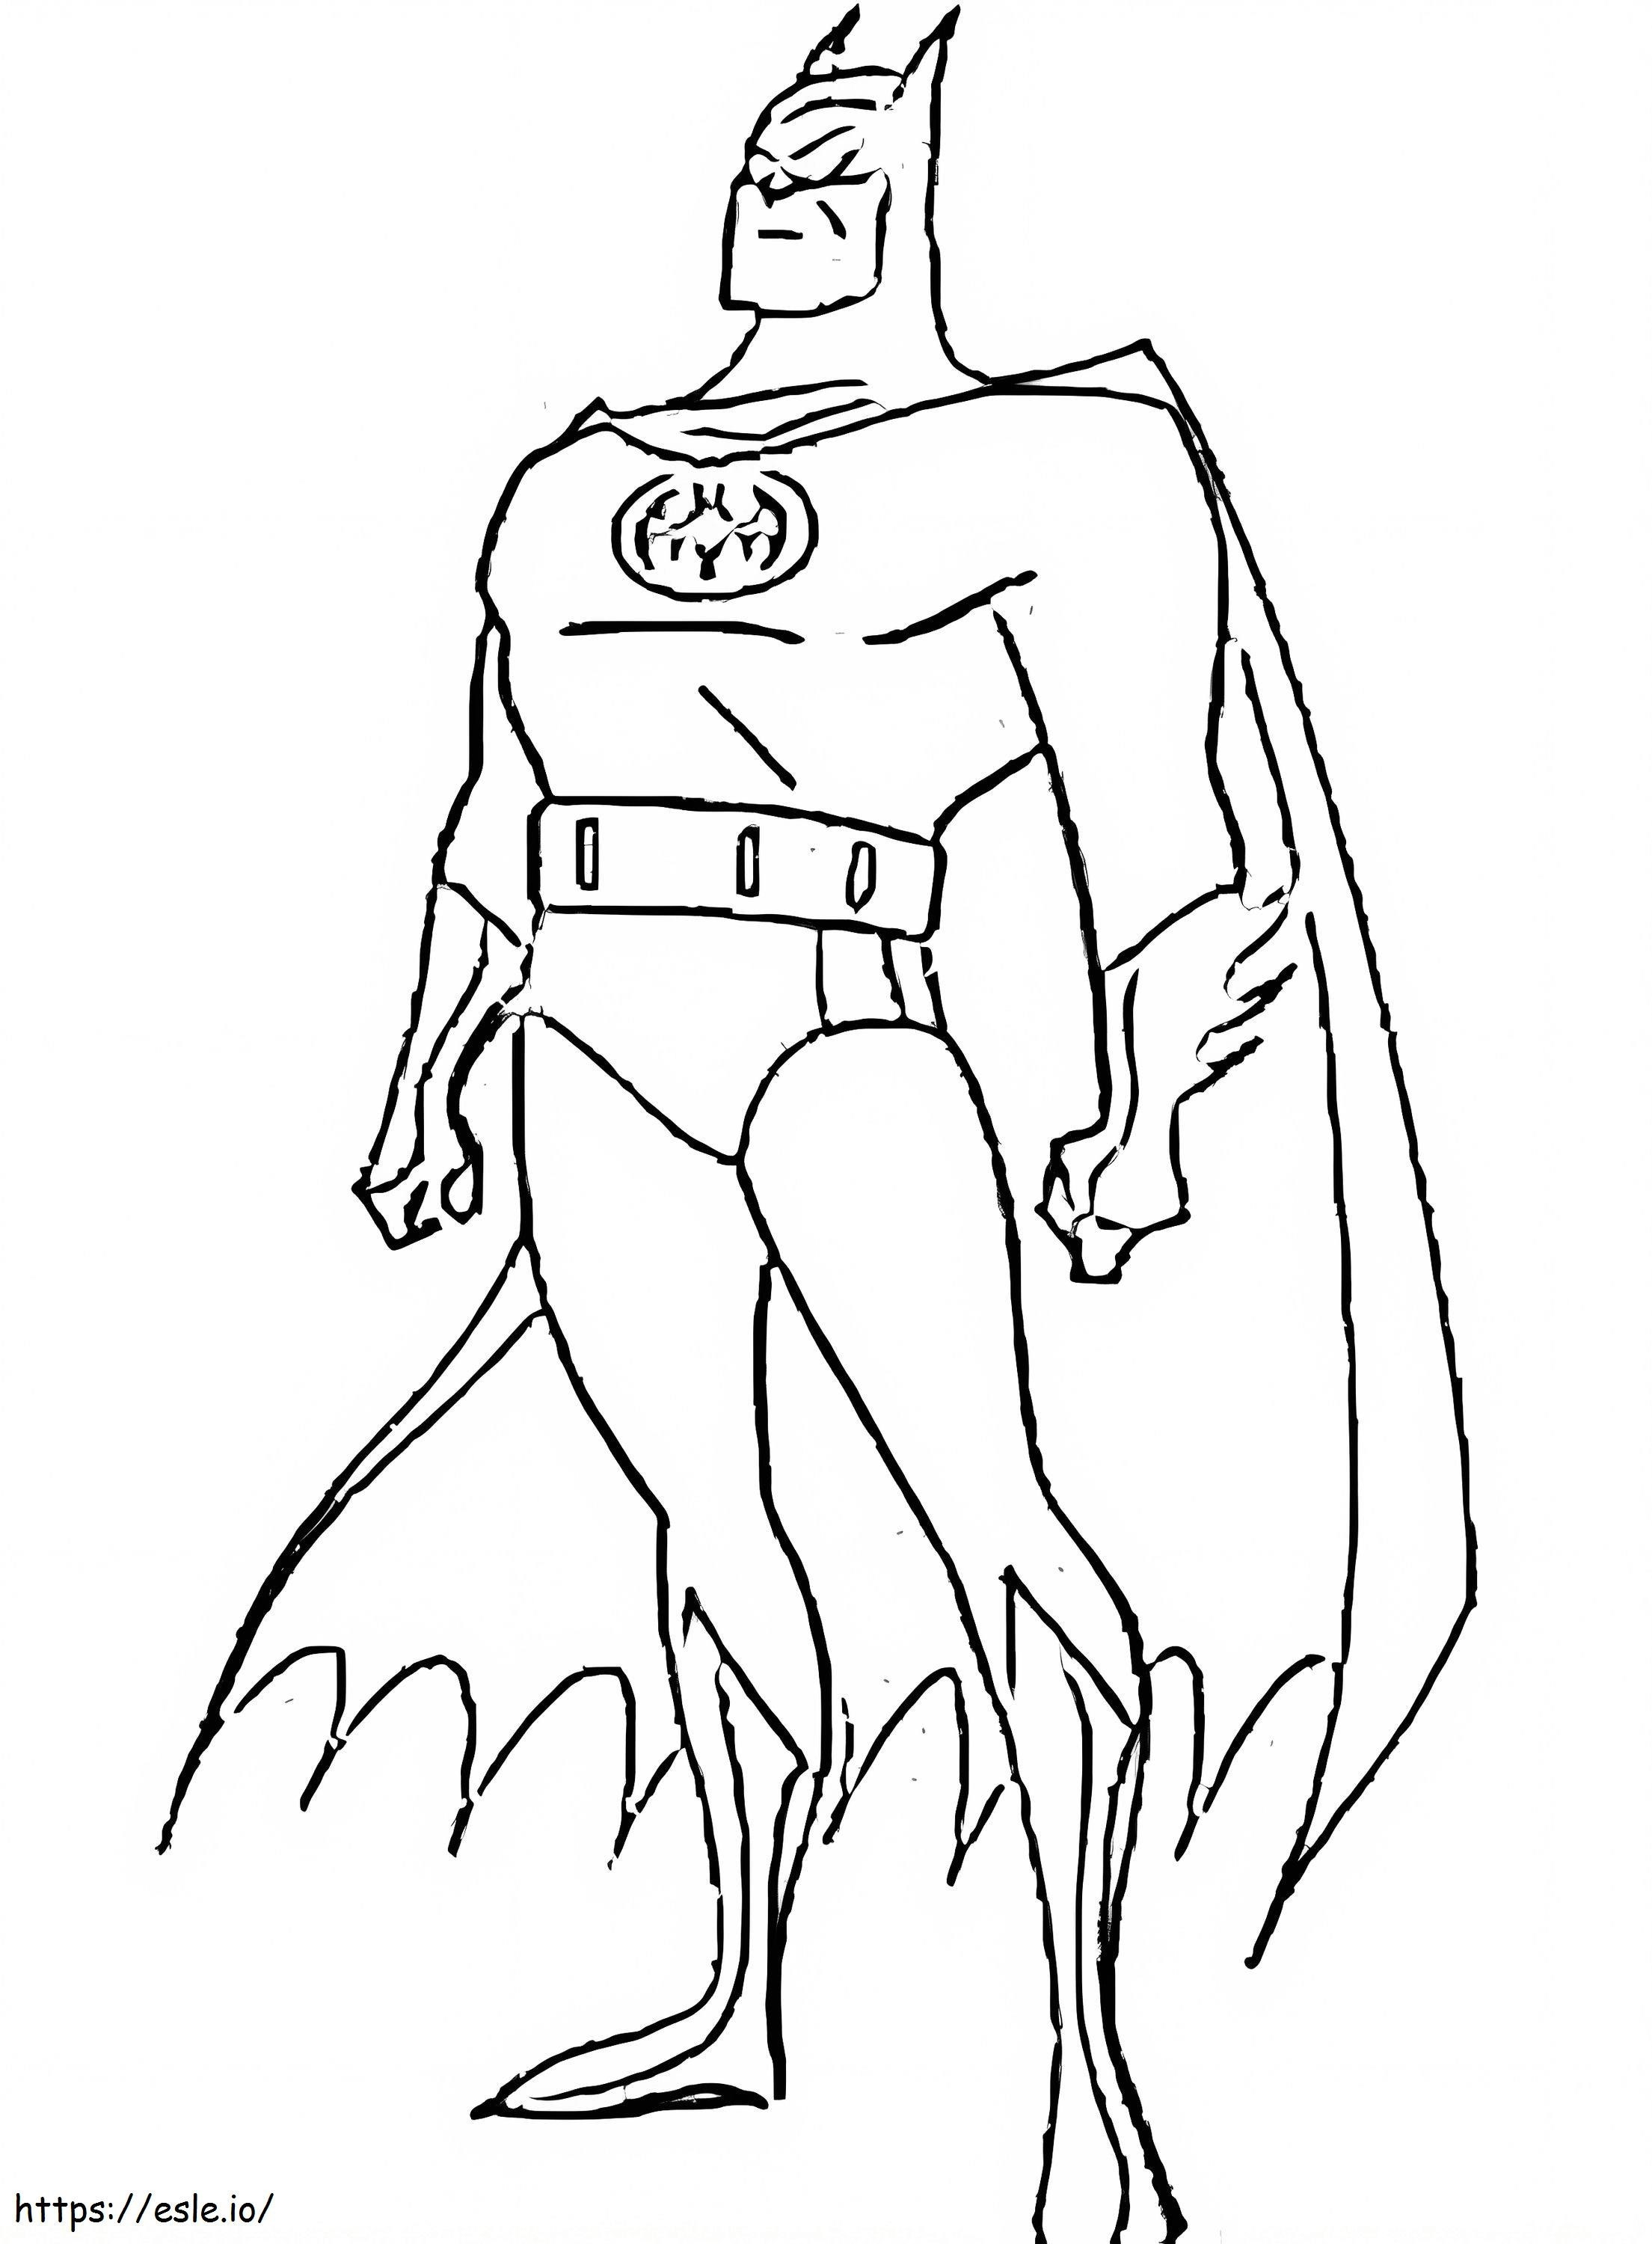 Bat Man 1 coloring page